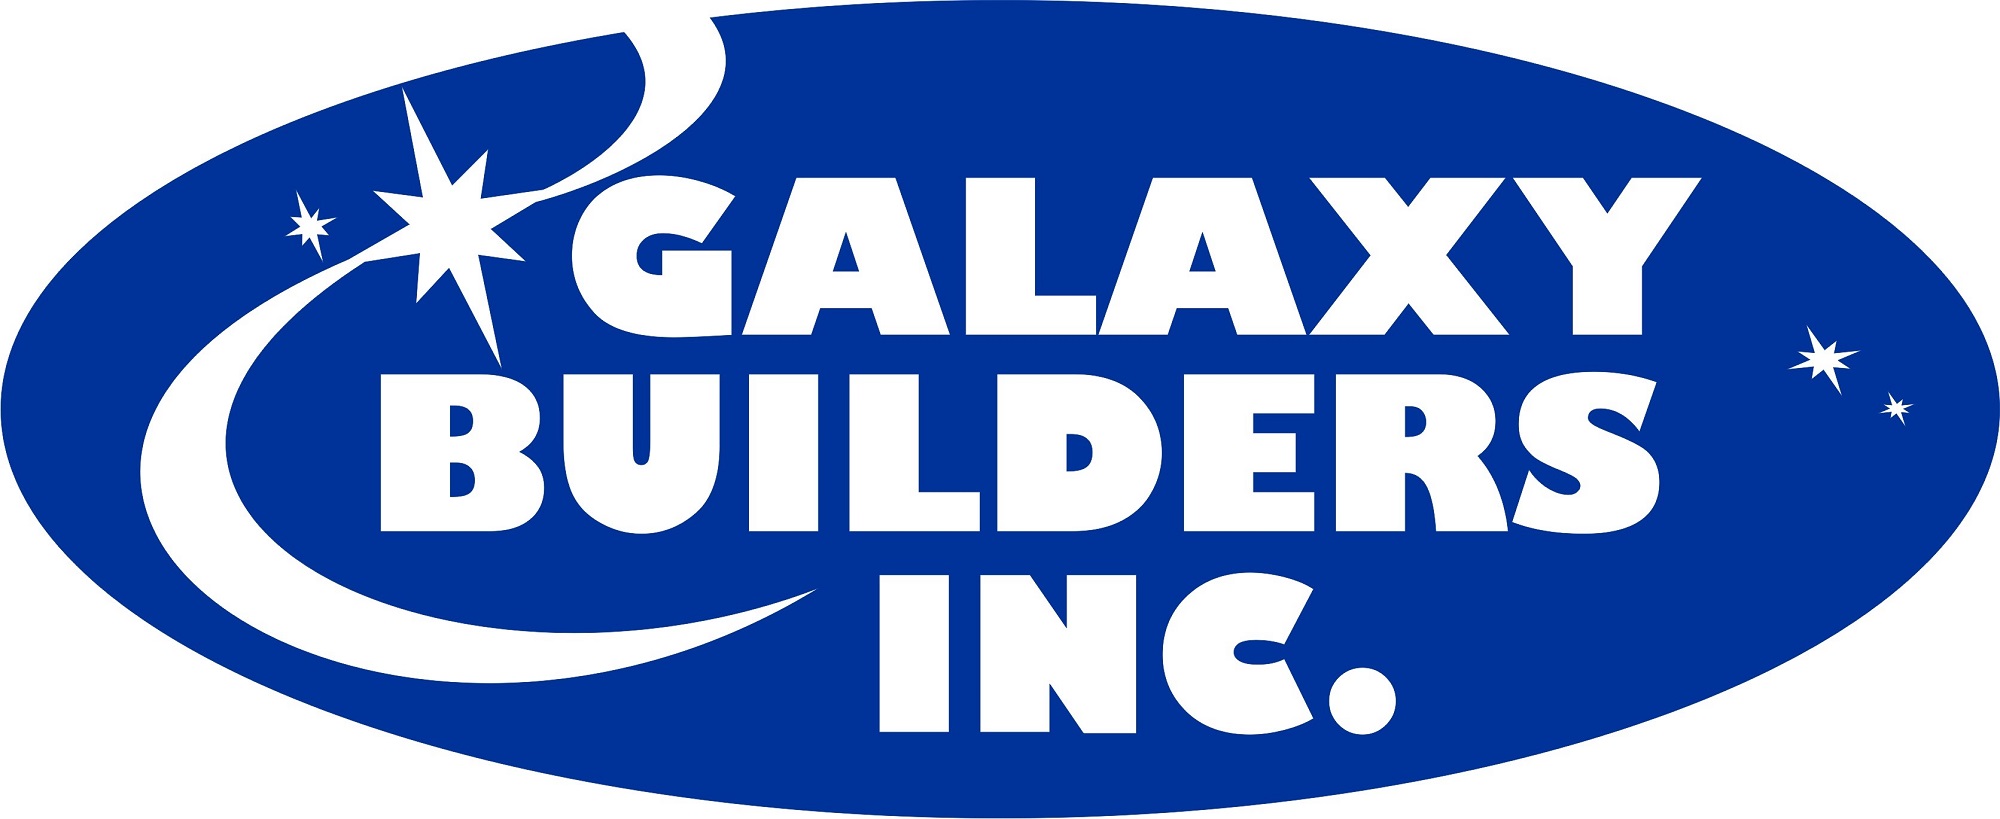 Galaxy Builders Inc., FCHCC November 2018 Member Spotlight